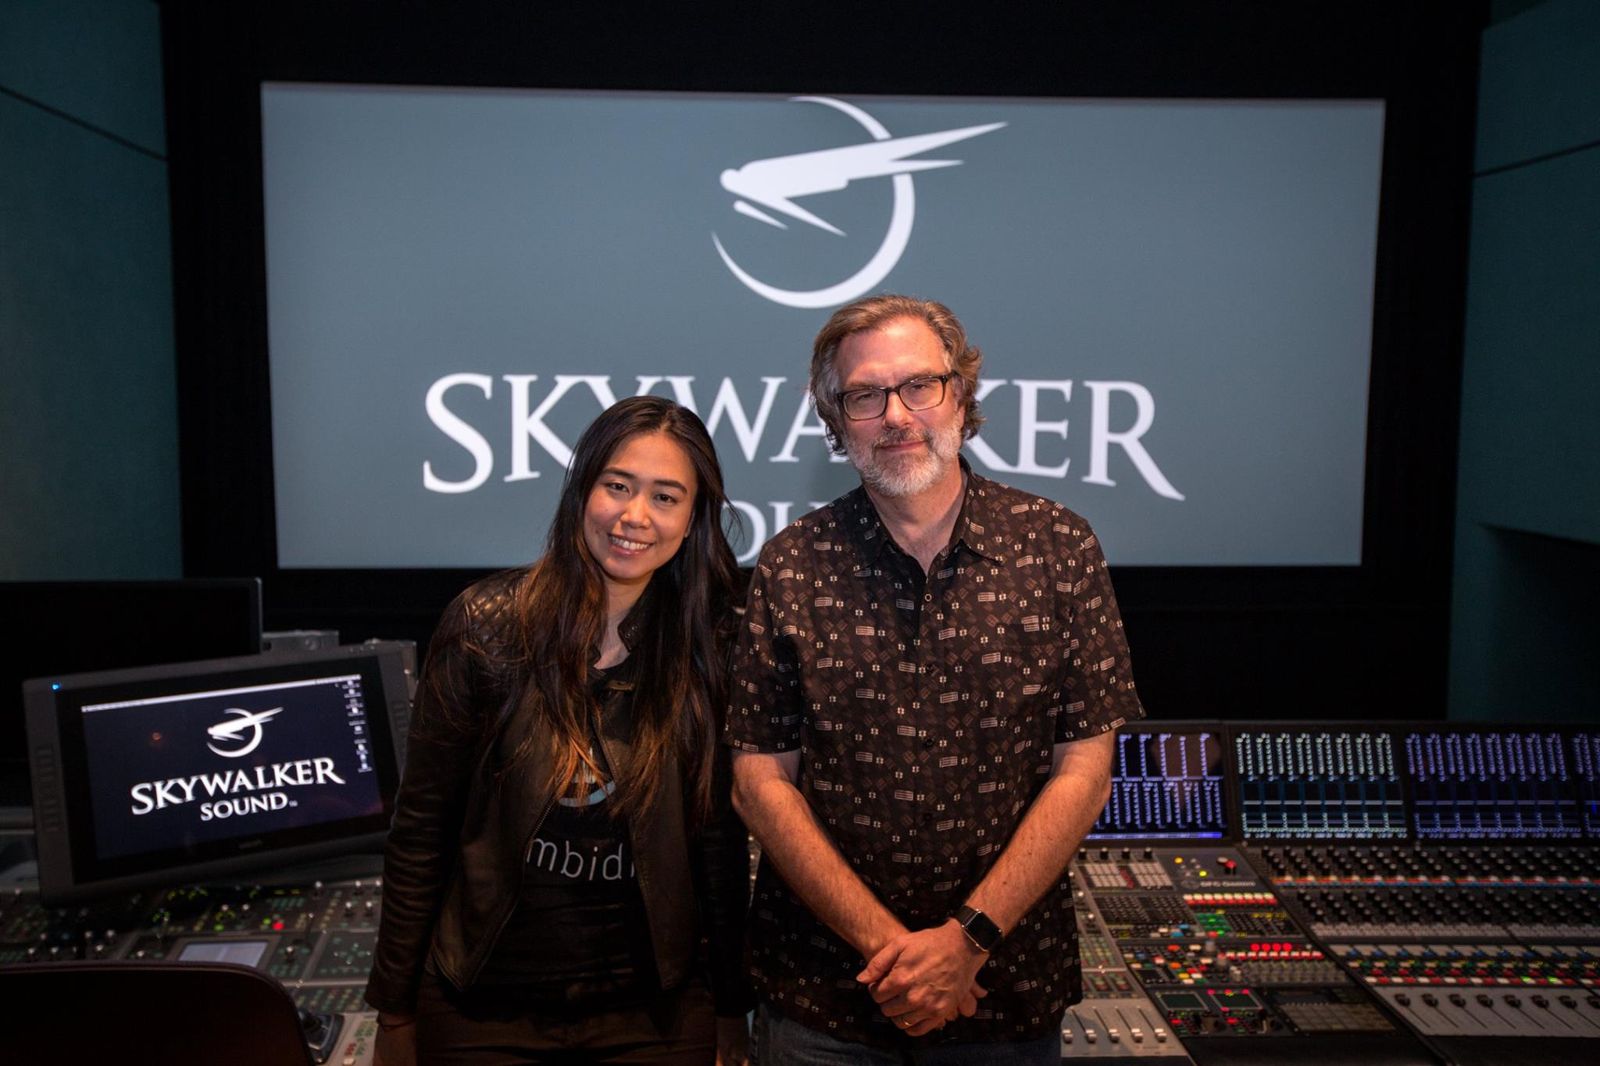 Звук teams. Skywalker Sound. Post Production Sound services by Skywalker Sound.